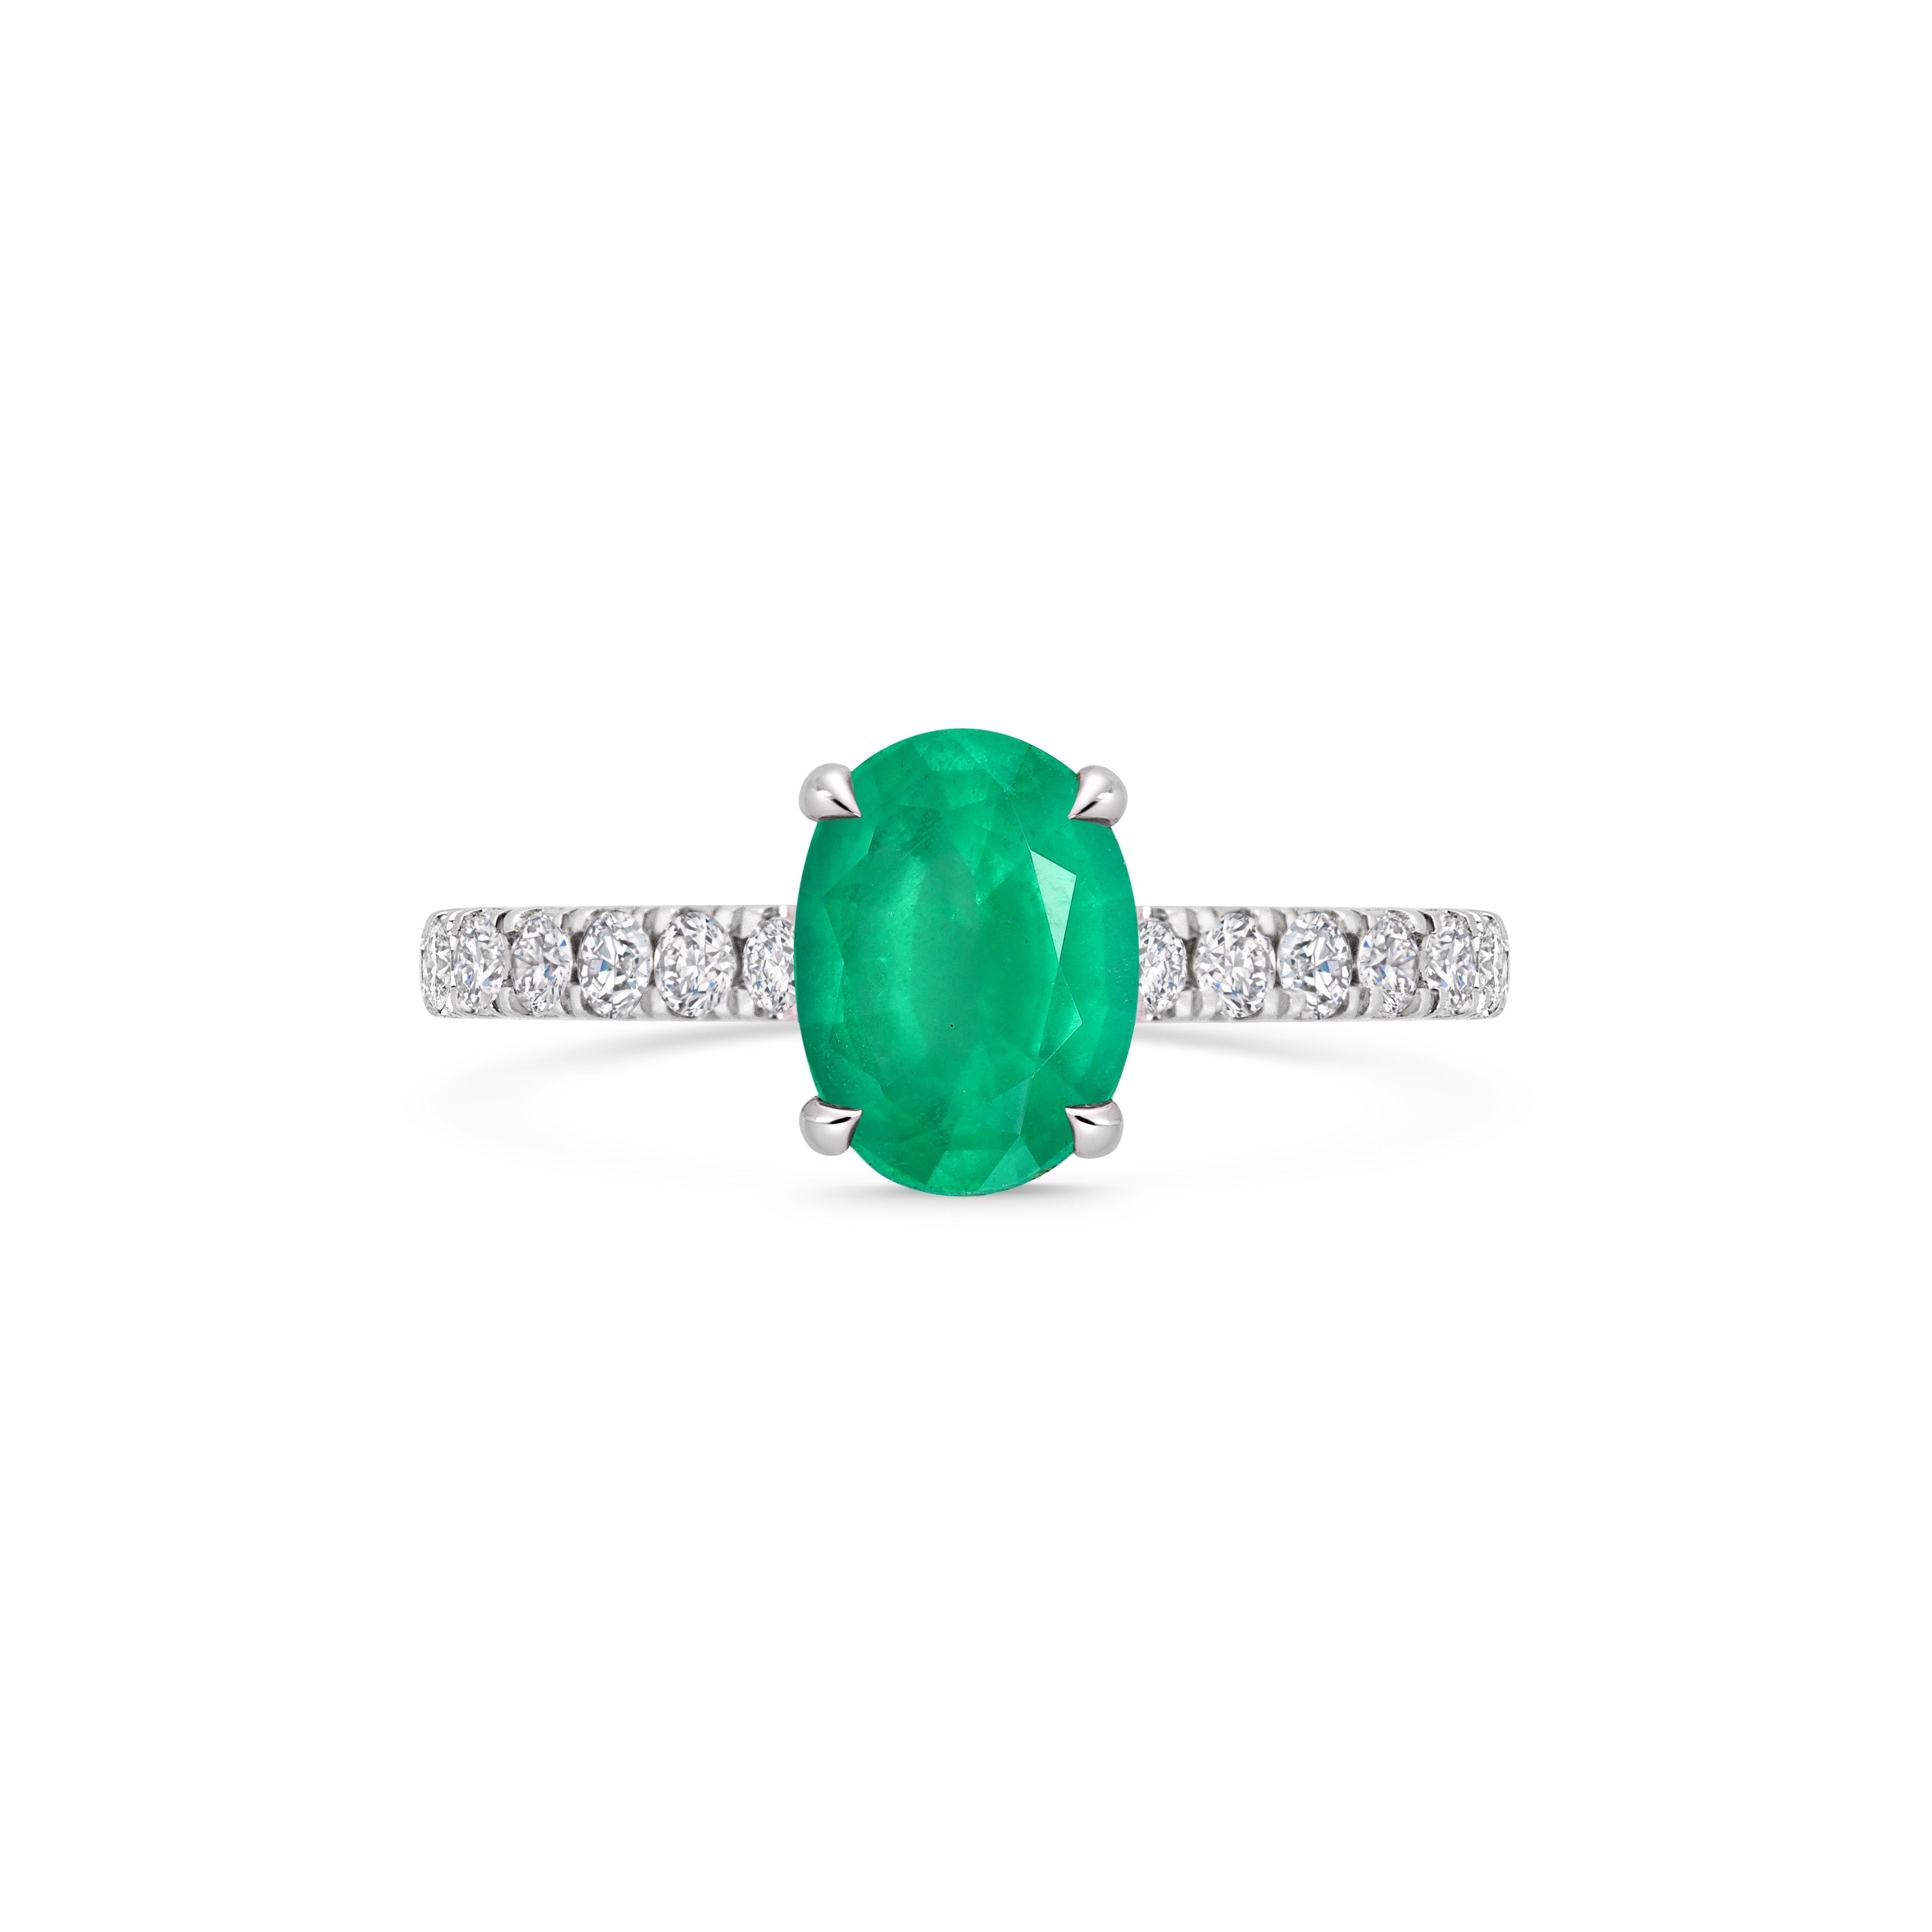 DIANE green emerald